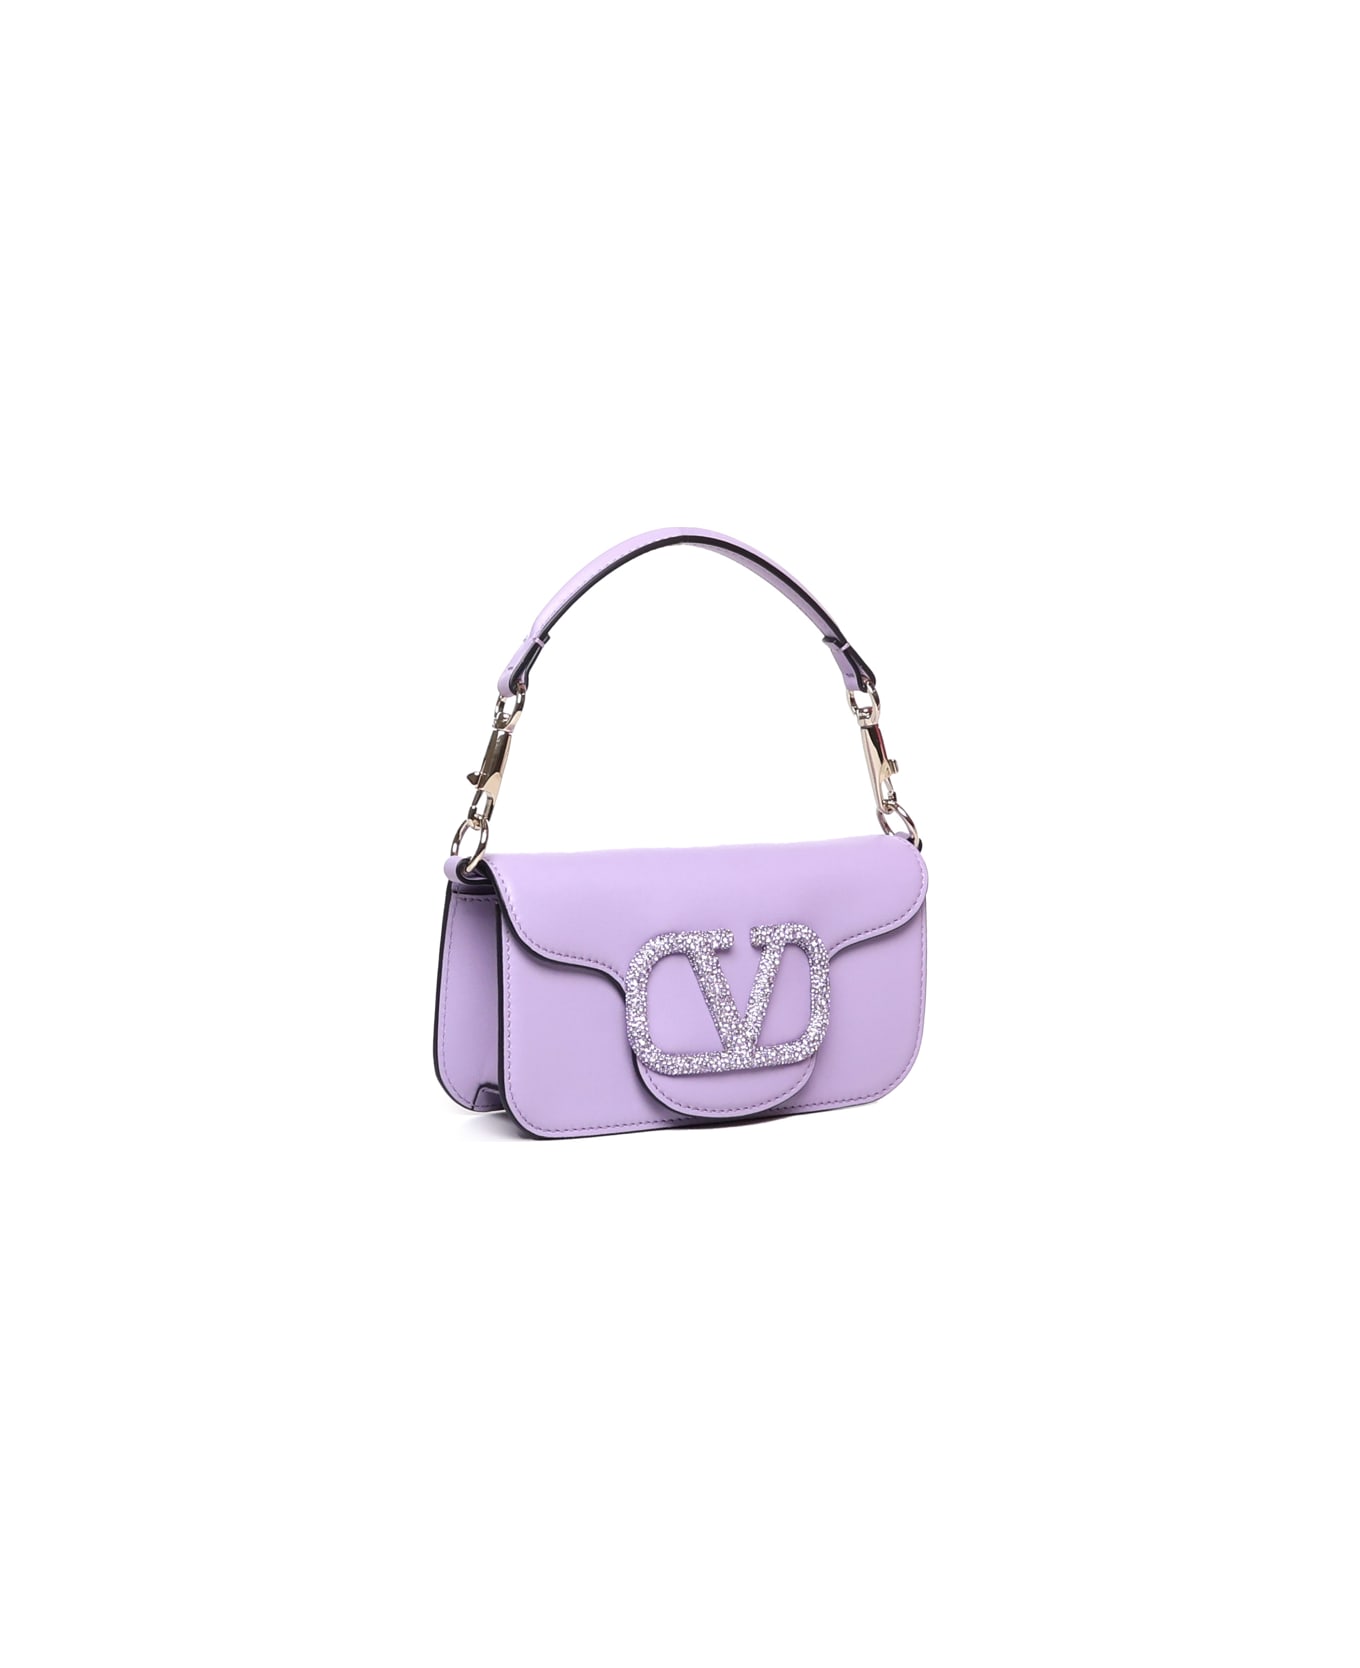 Valentino Garavani Locò Bag In Calfskin - Aster lilac/violet